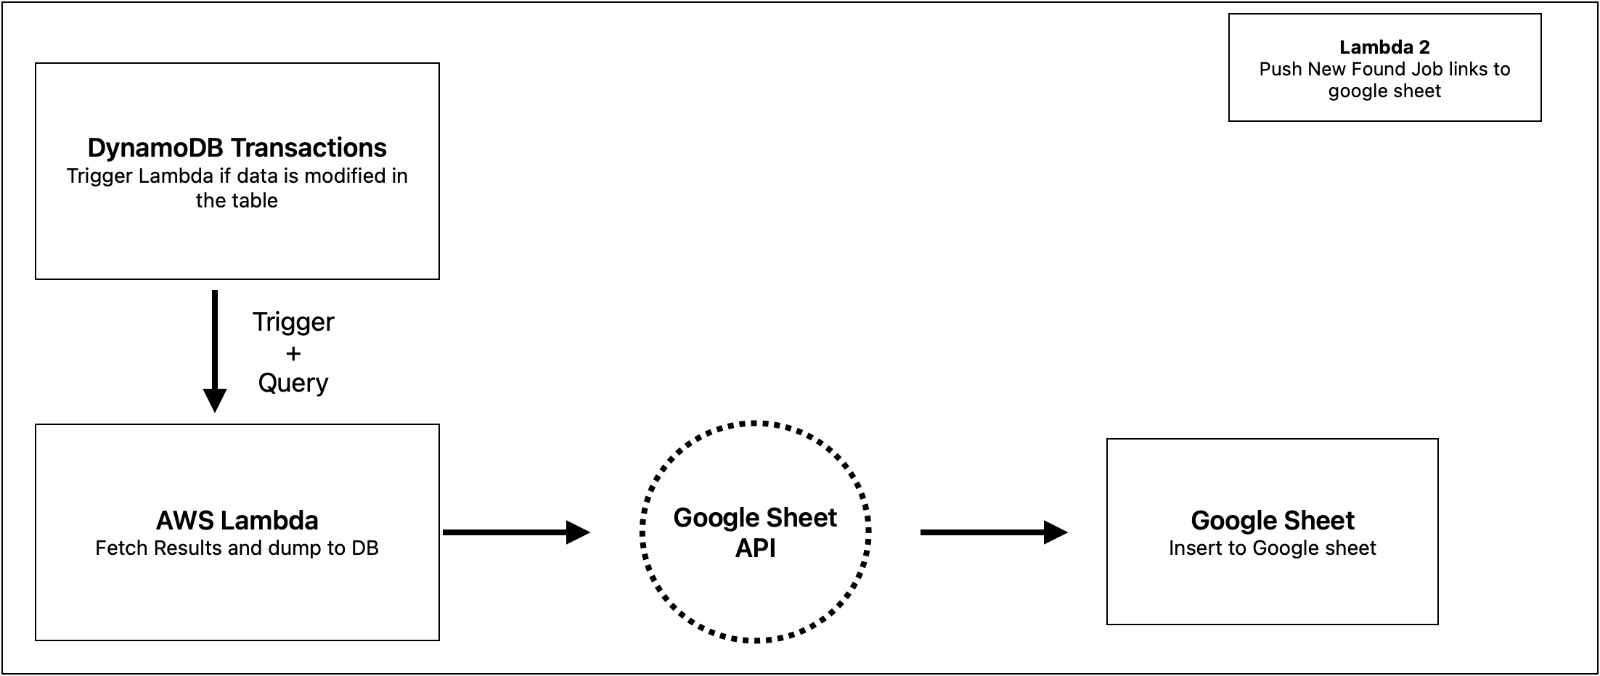 Picture showing Lambda 2 Process